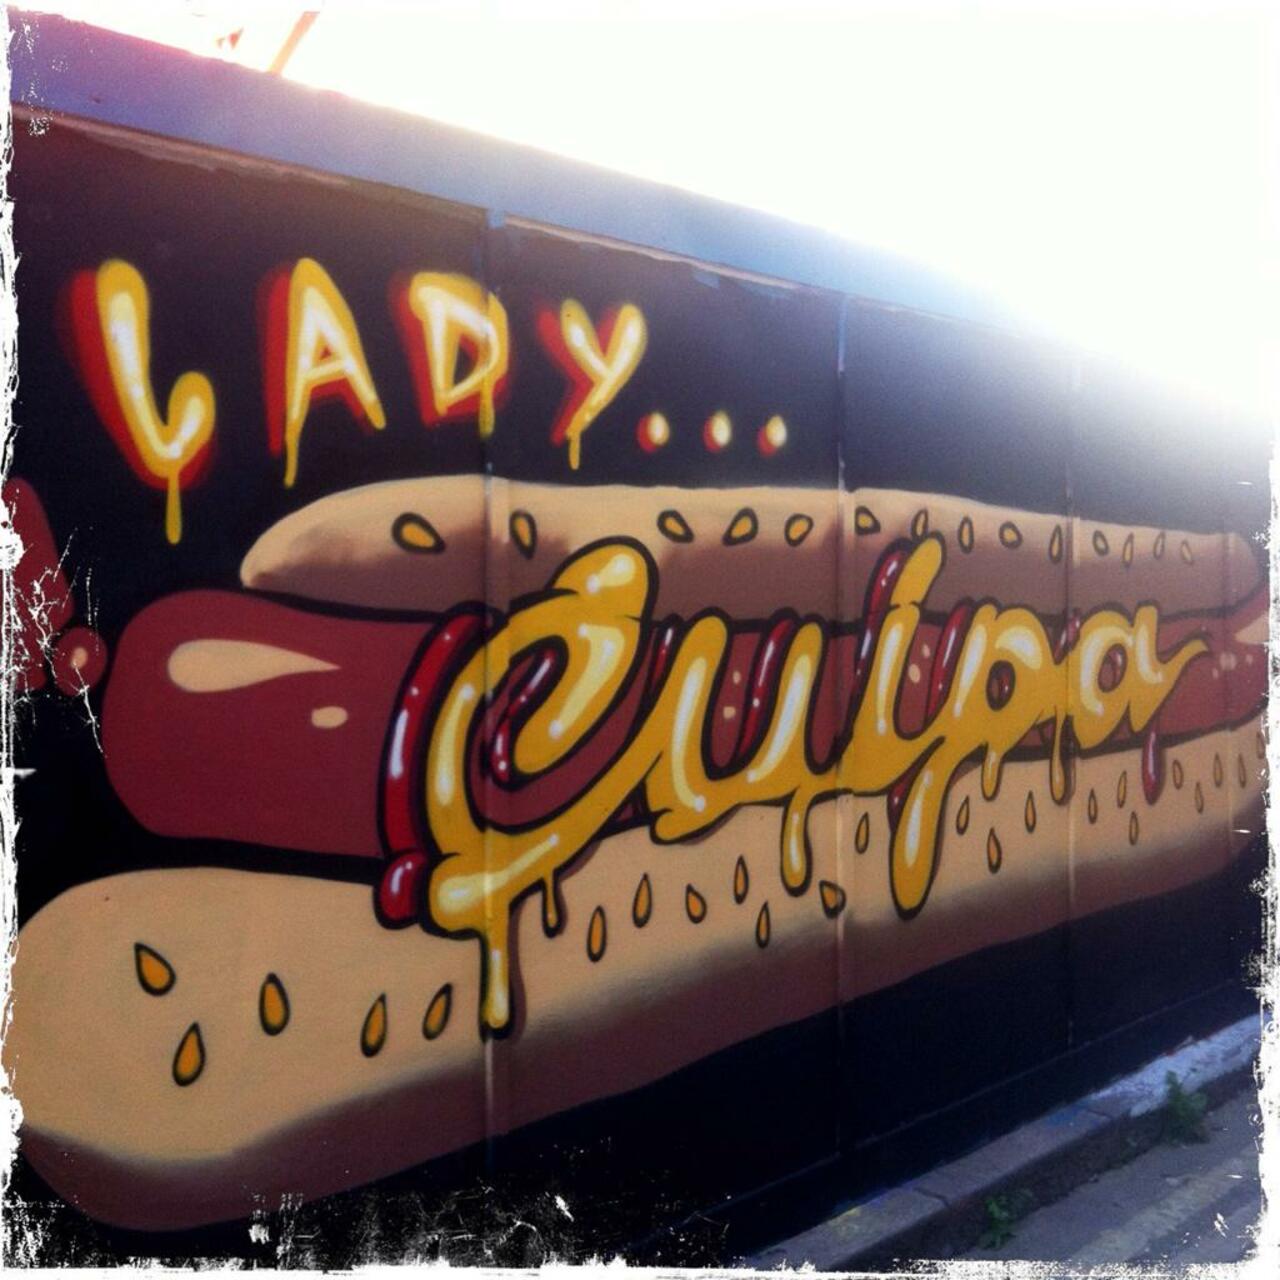 Hot Dog on Blackall Street from #LadyCupla 

#streetart #graffiti http://t.co/aJ8tZa6ocd